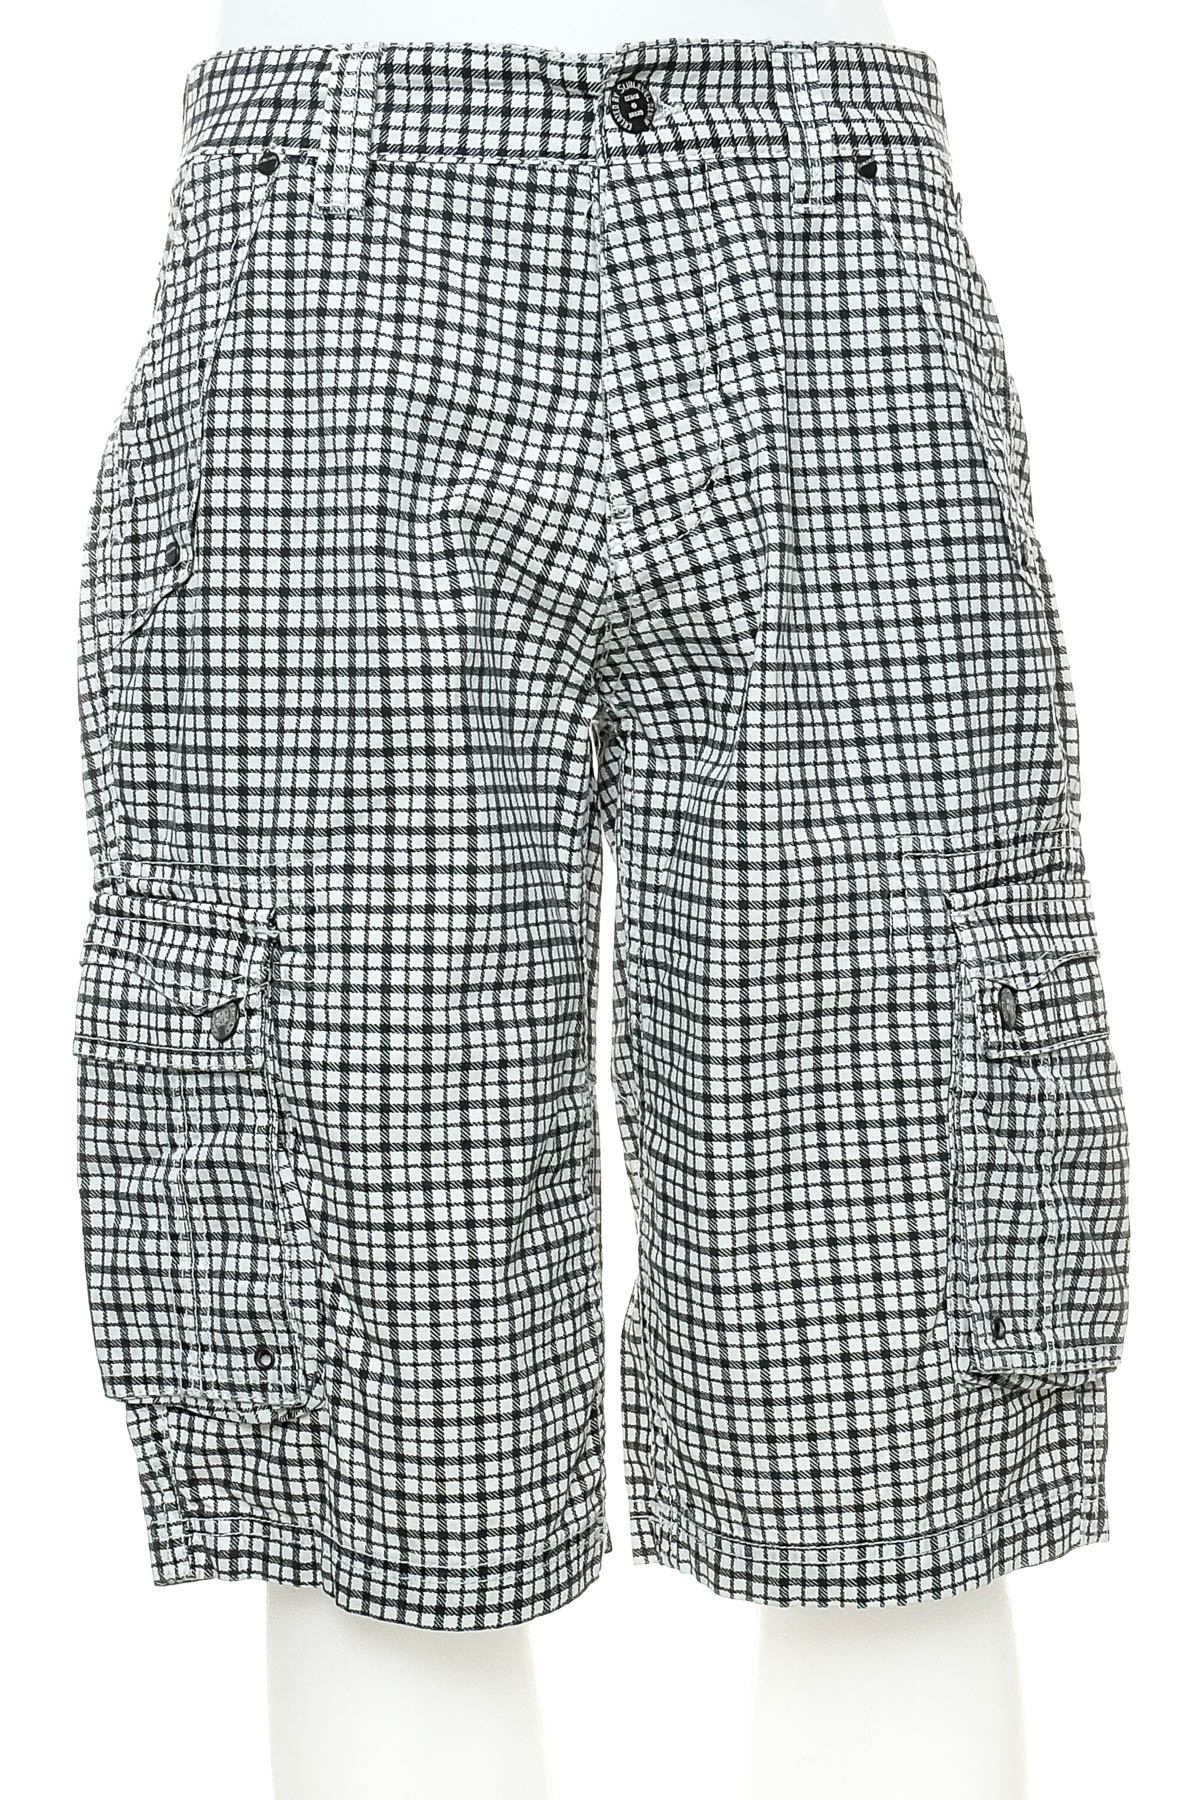 Men's shorts - SUBLEVEL - 0